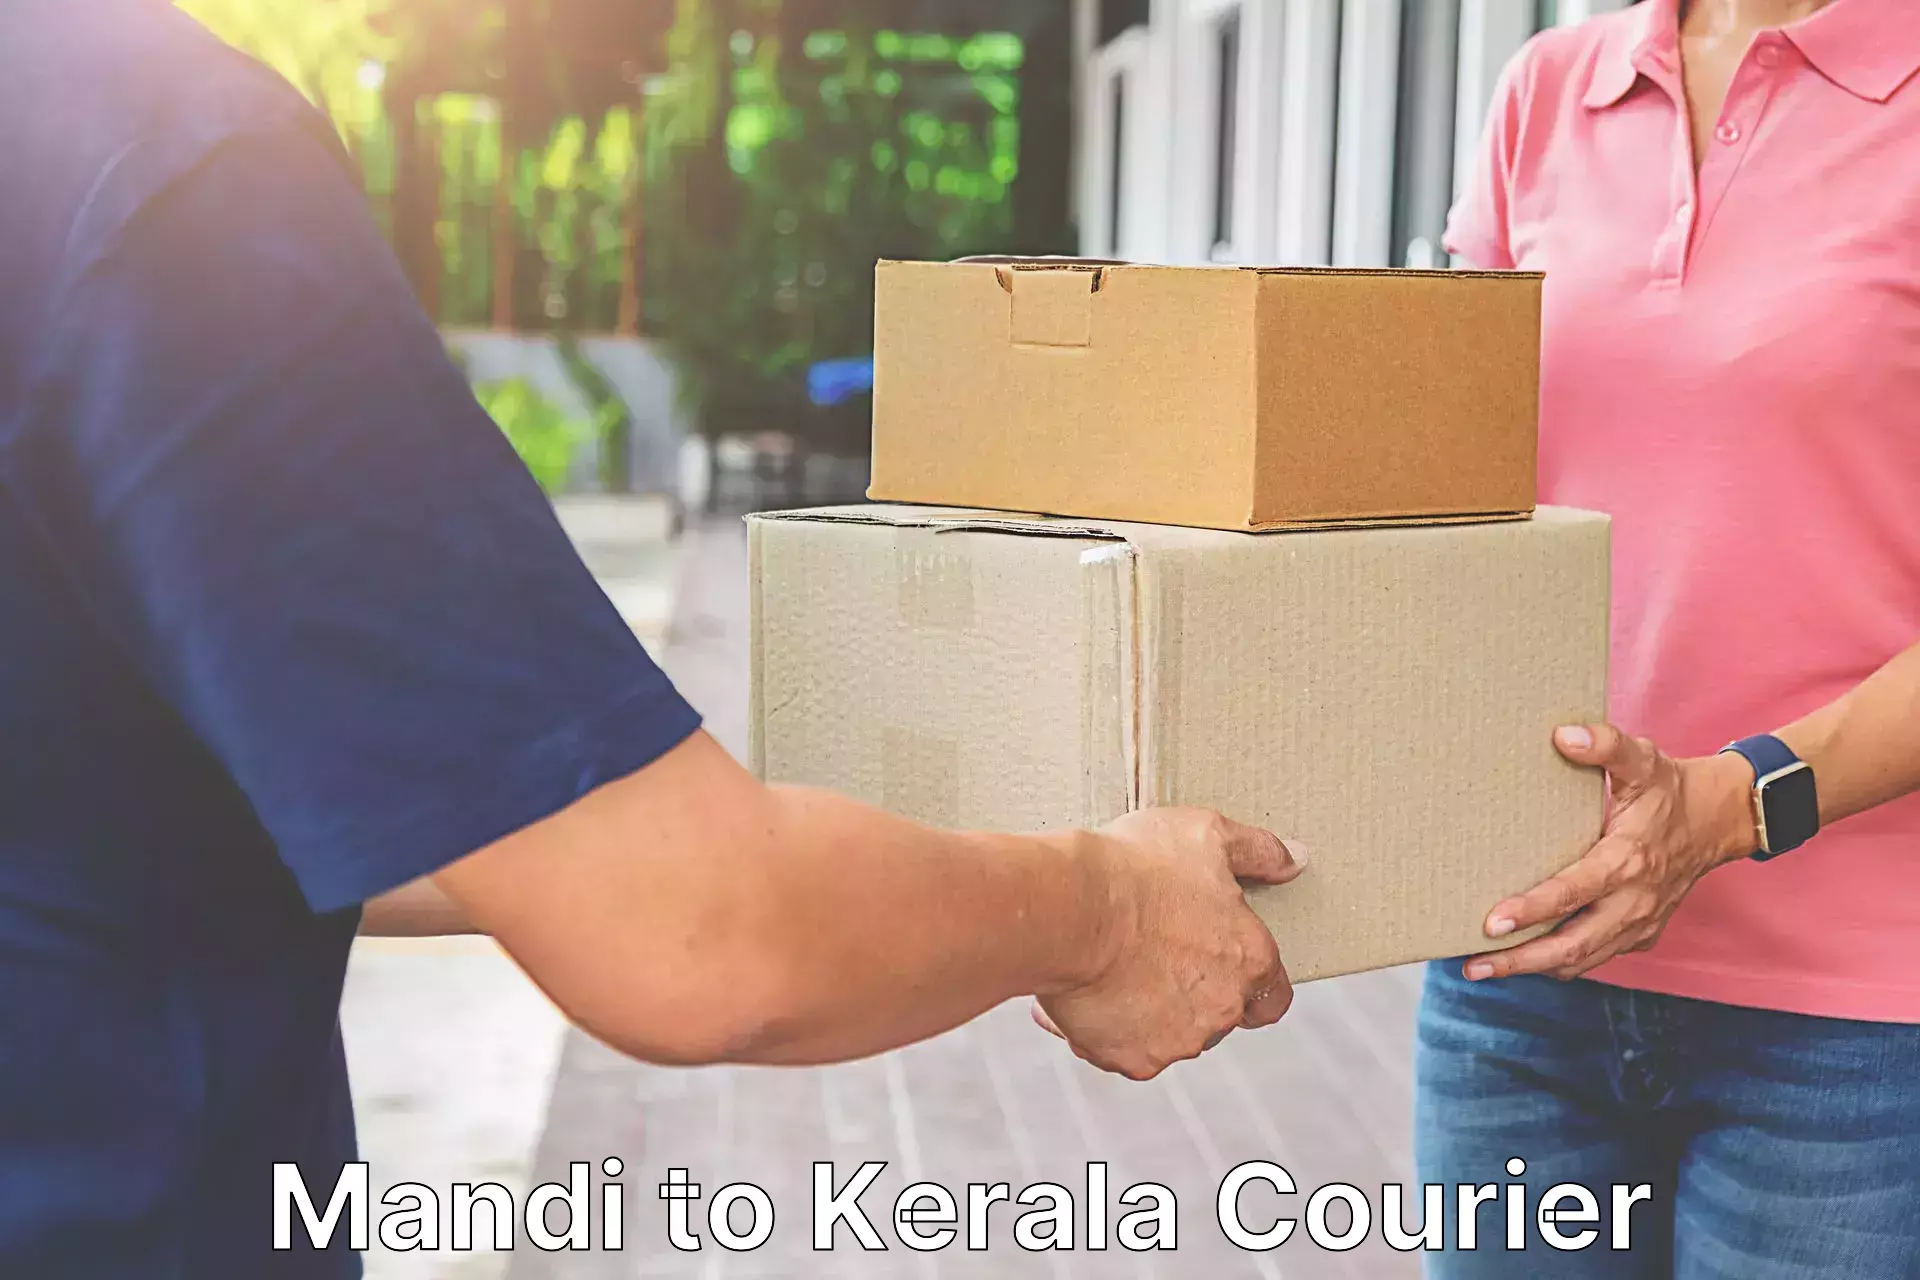 Affordable parcel service Mandi to Trivandrum